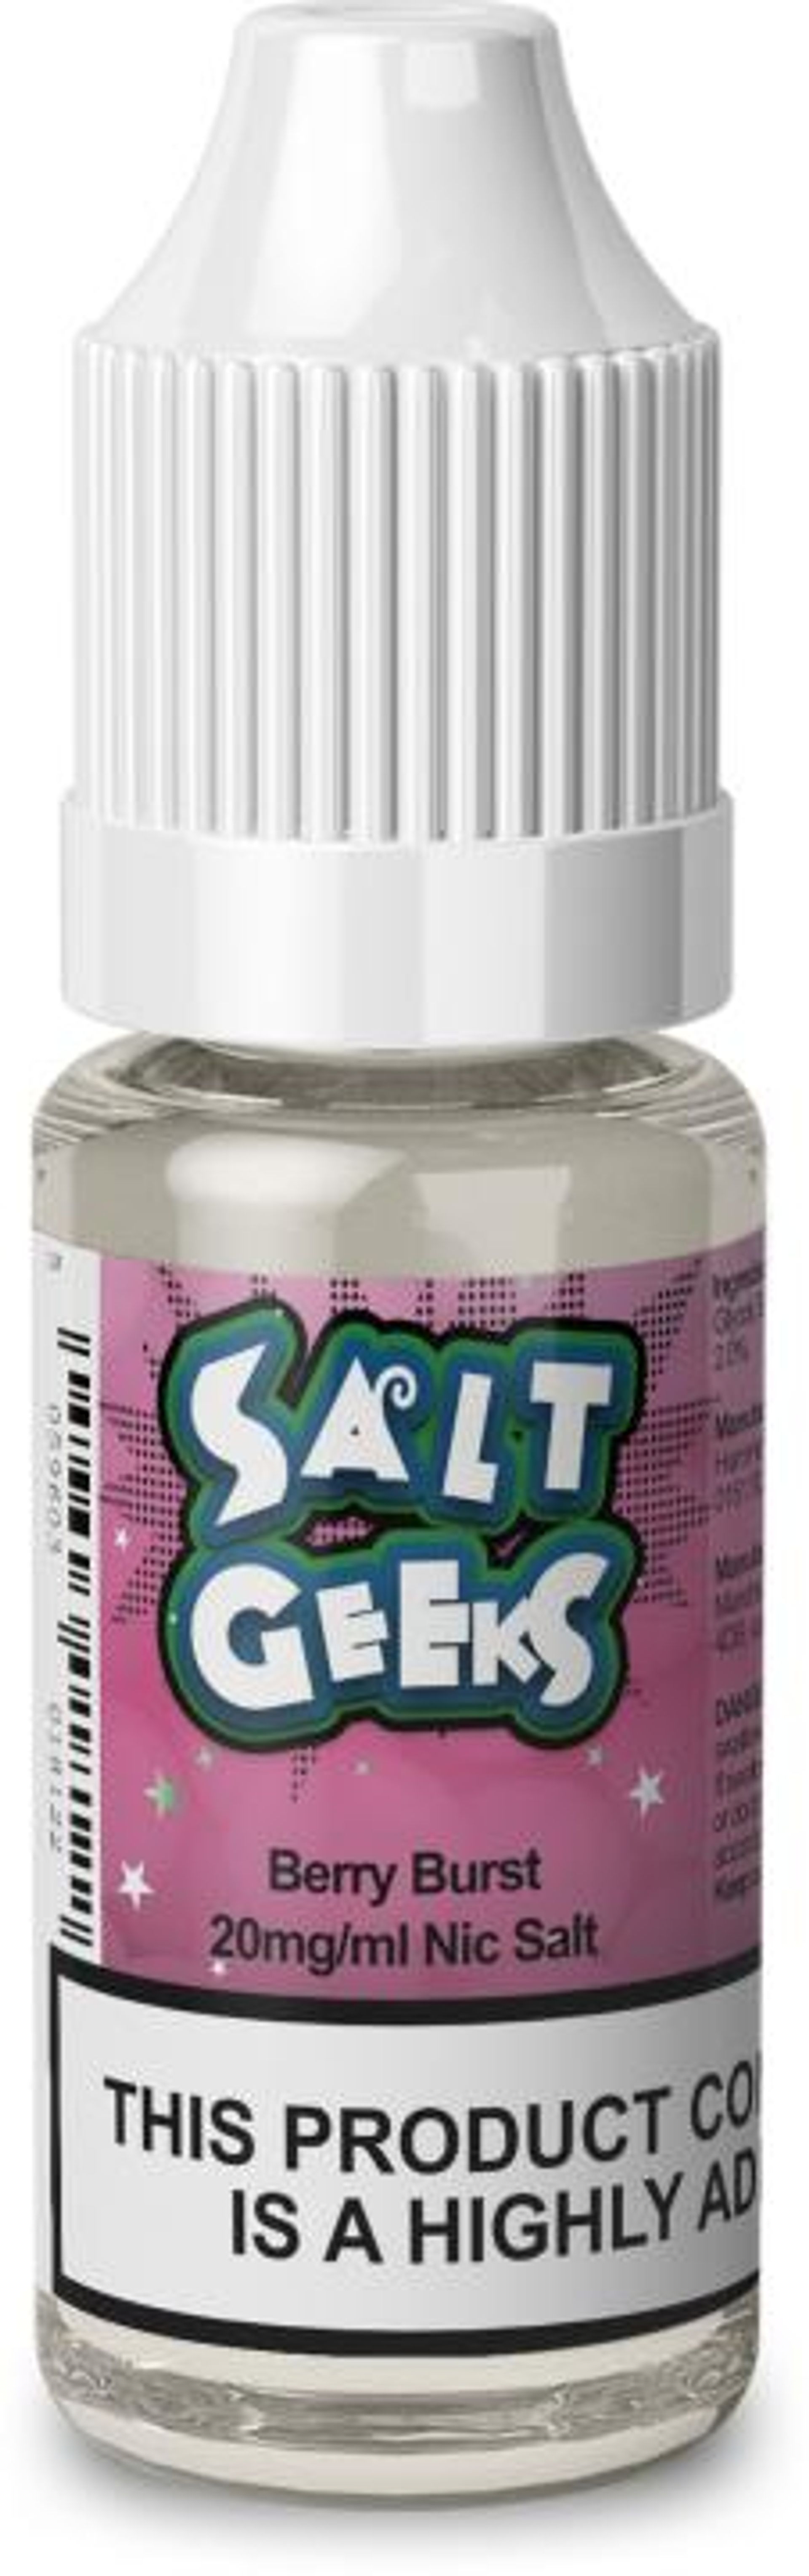 Image of Berry Burst by Salt Geeks